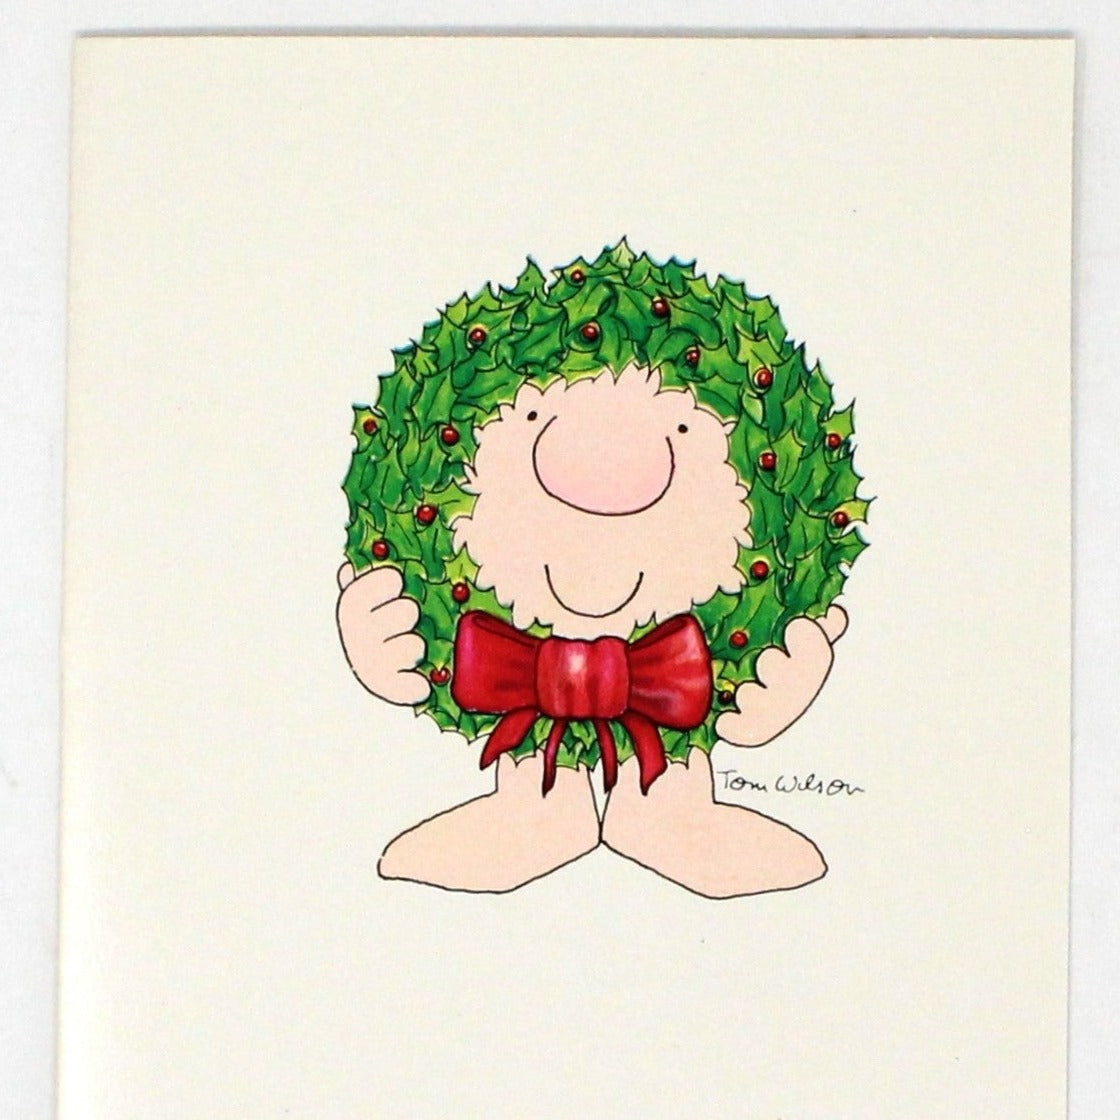 Greeting Card / Christmas Card, Ziggy with Christmas Wreath, Vintage American Greetings